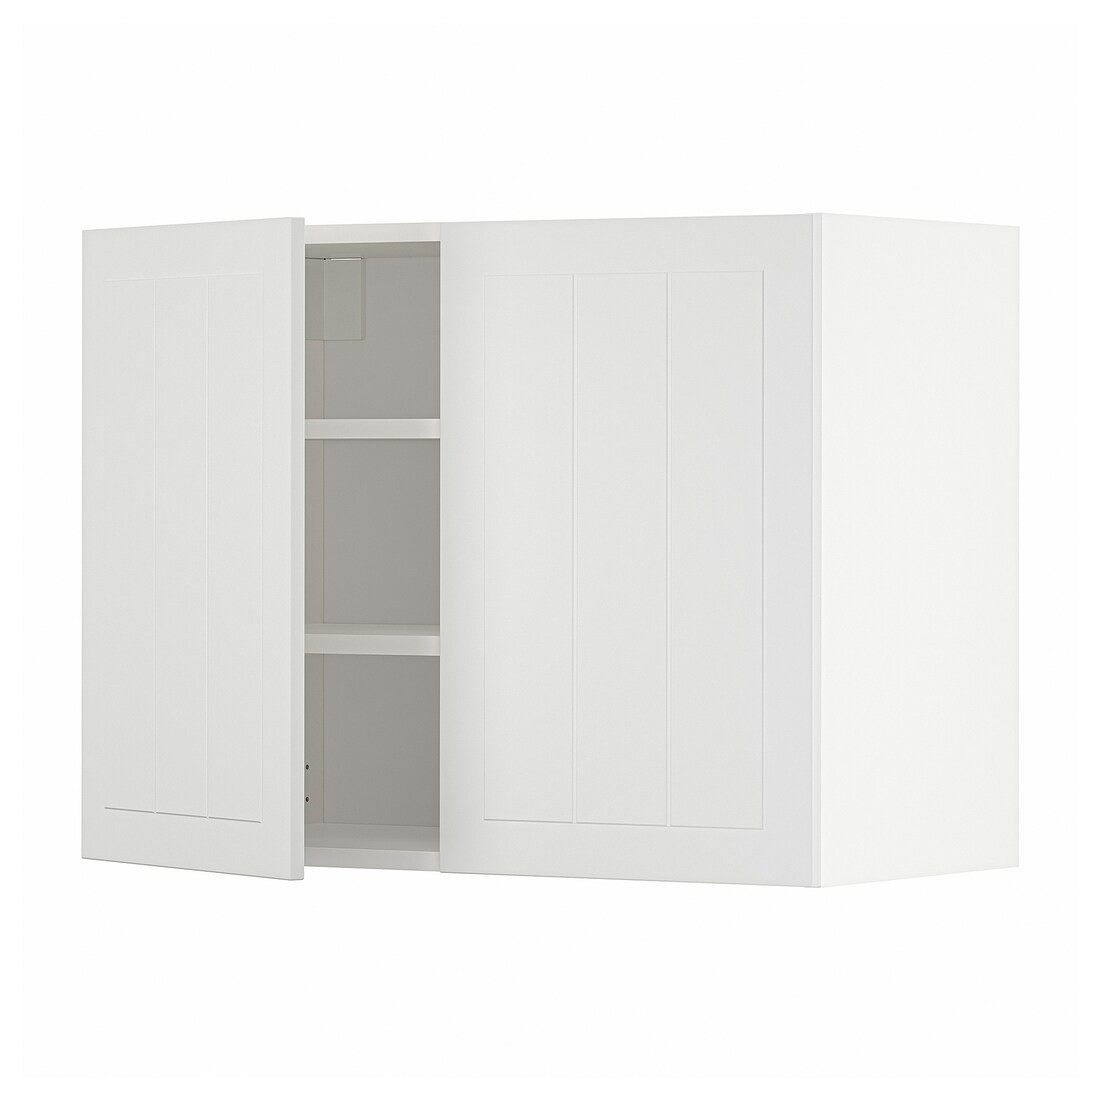 METOD МЕТОД Навесной шкаф с полками / 2 дверцы, белый / Stensund белый, 80x60 см